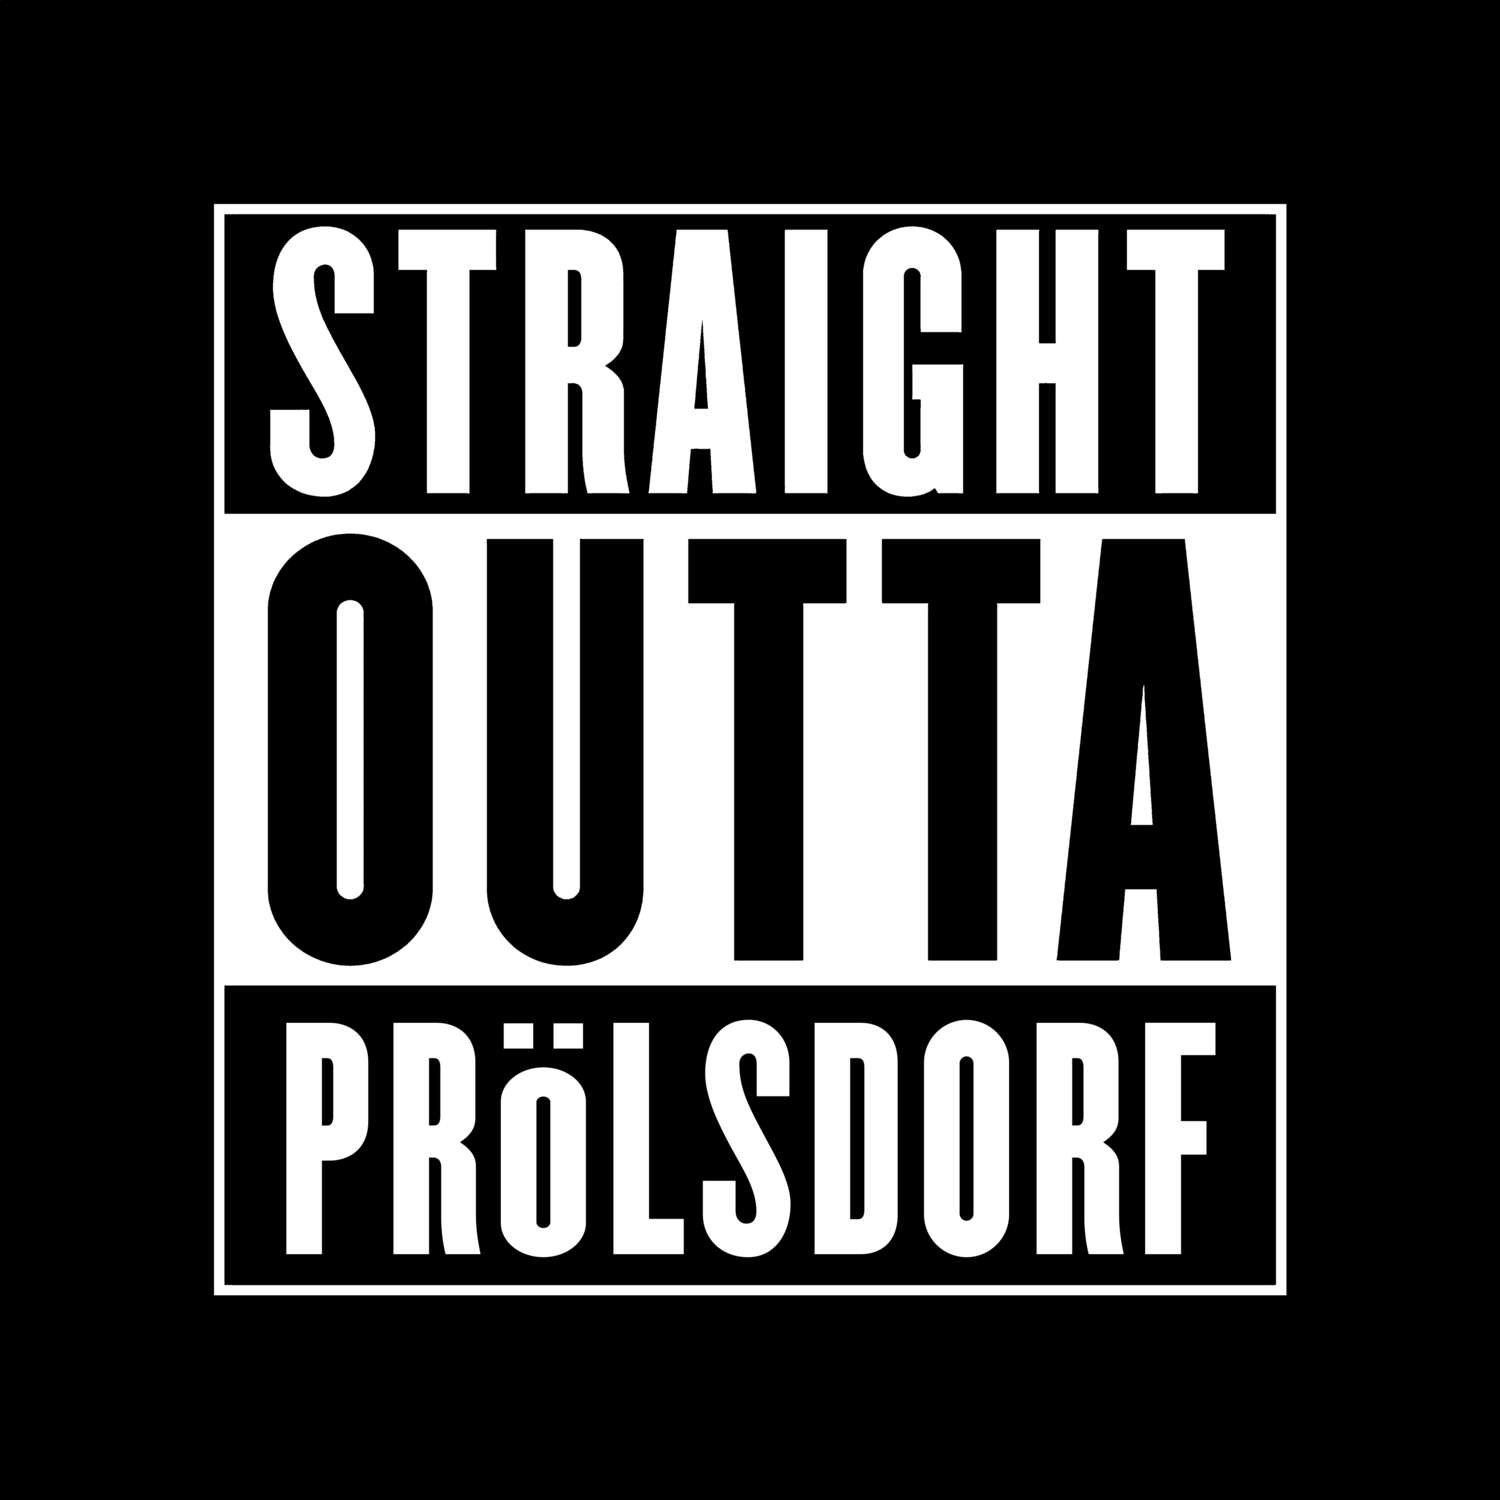 Prölsdorf T-Shirt »Straight Outta«